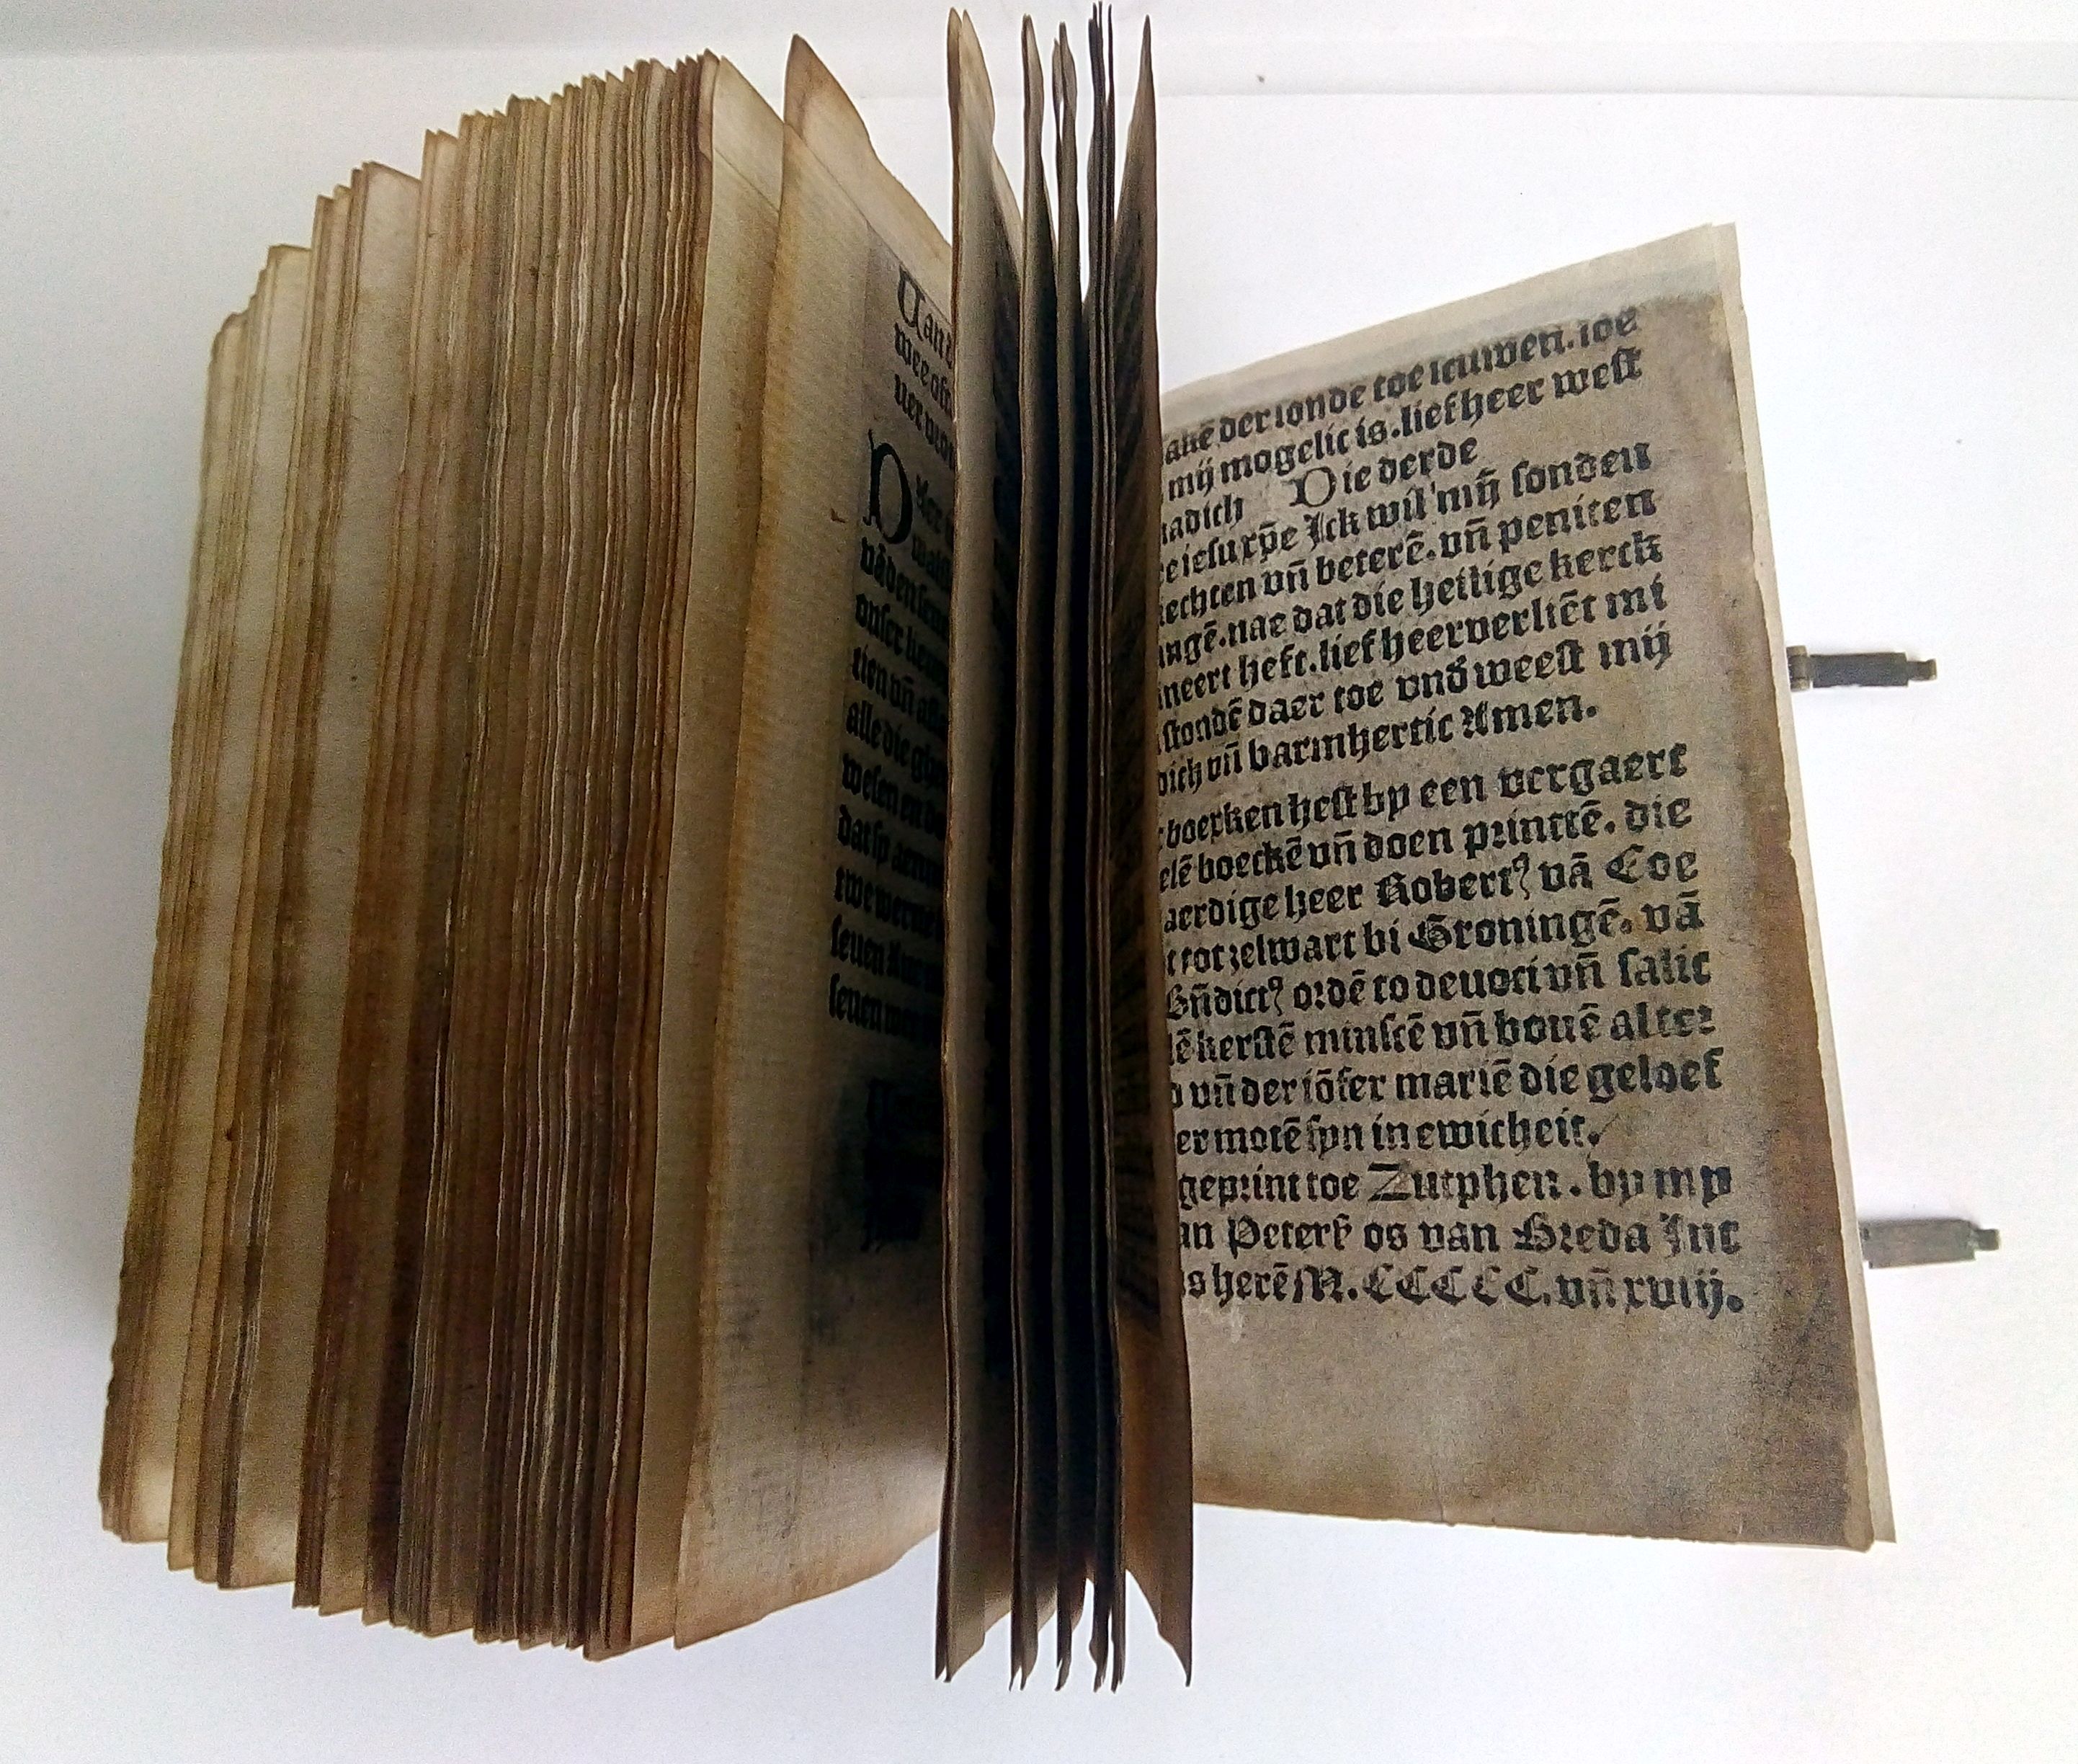 Thieman boekje 1518